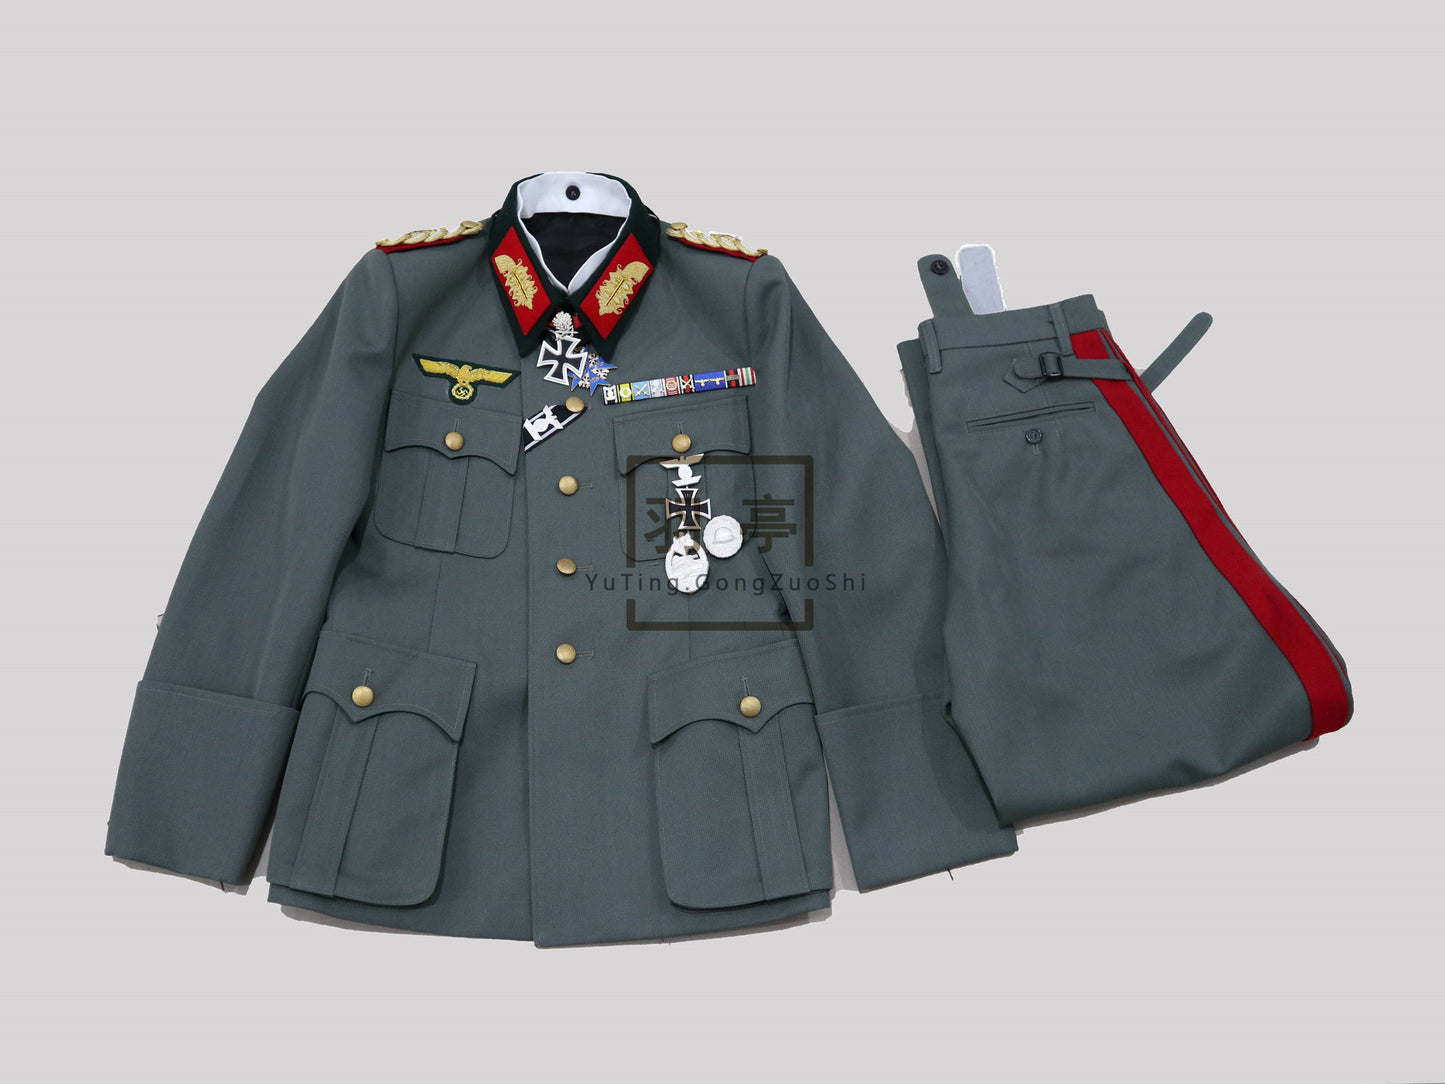 WWII German Army Marshal Rommel